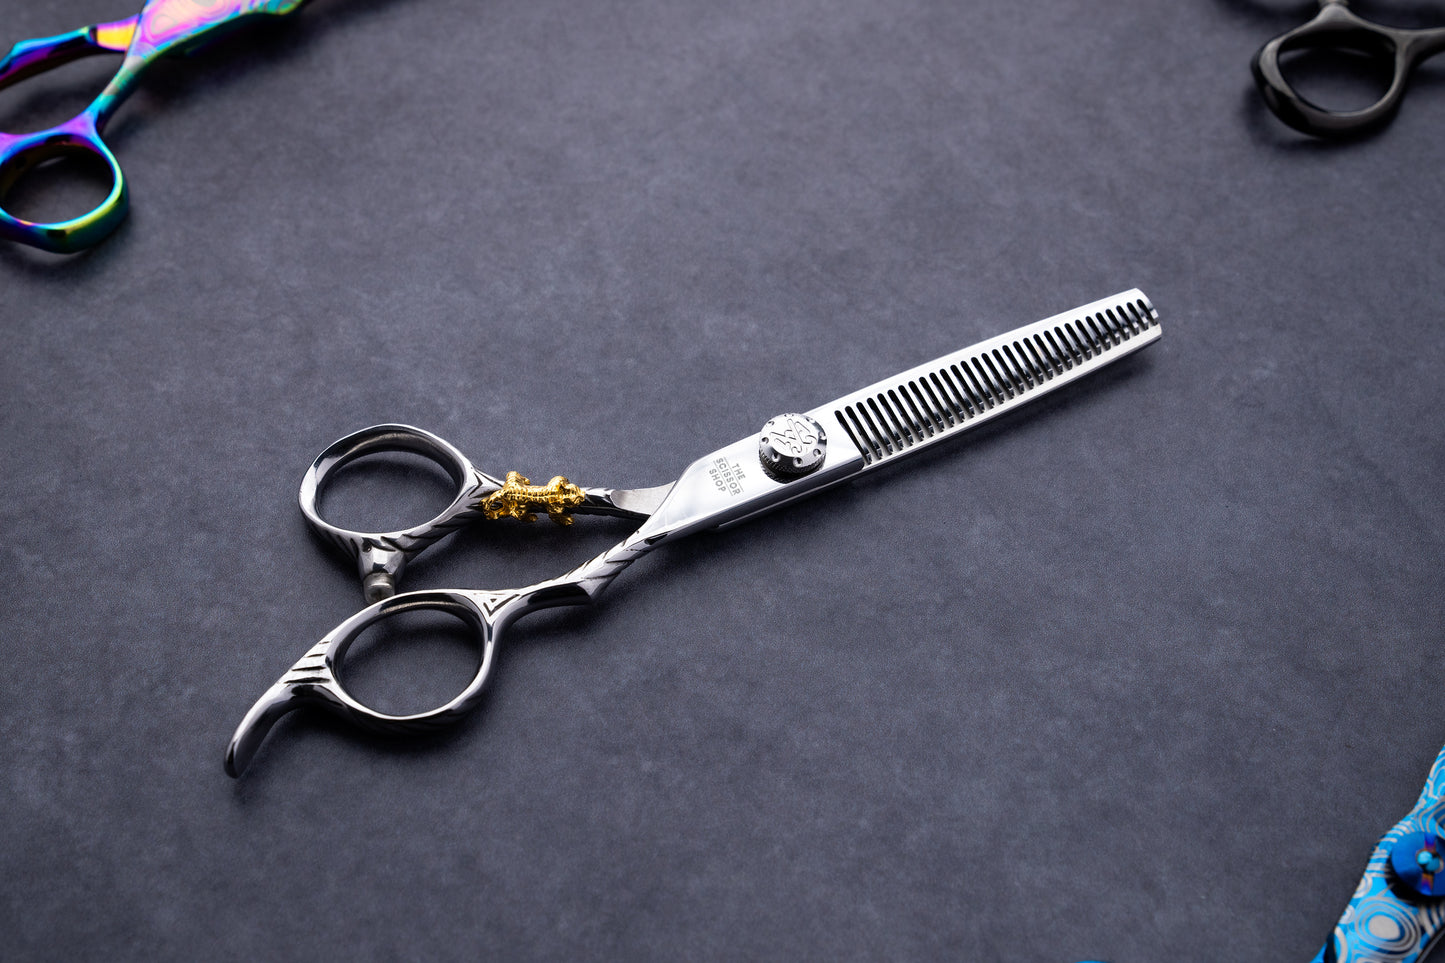 Tora Series 6" Japanese Steel Hairdressing Scissors